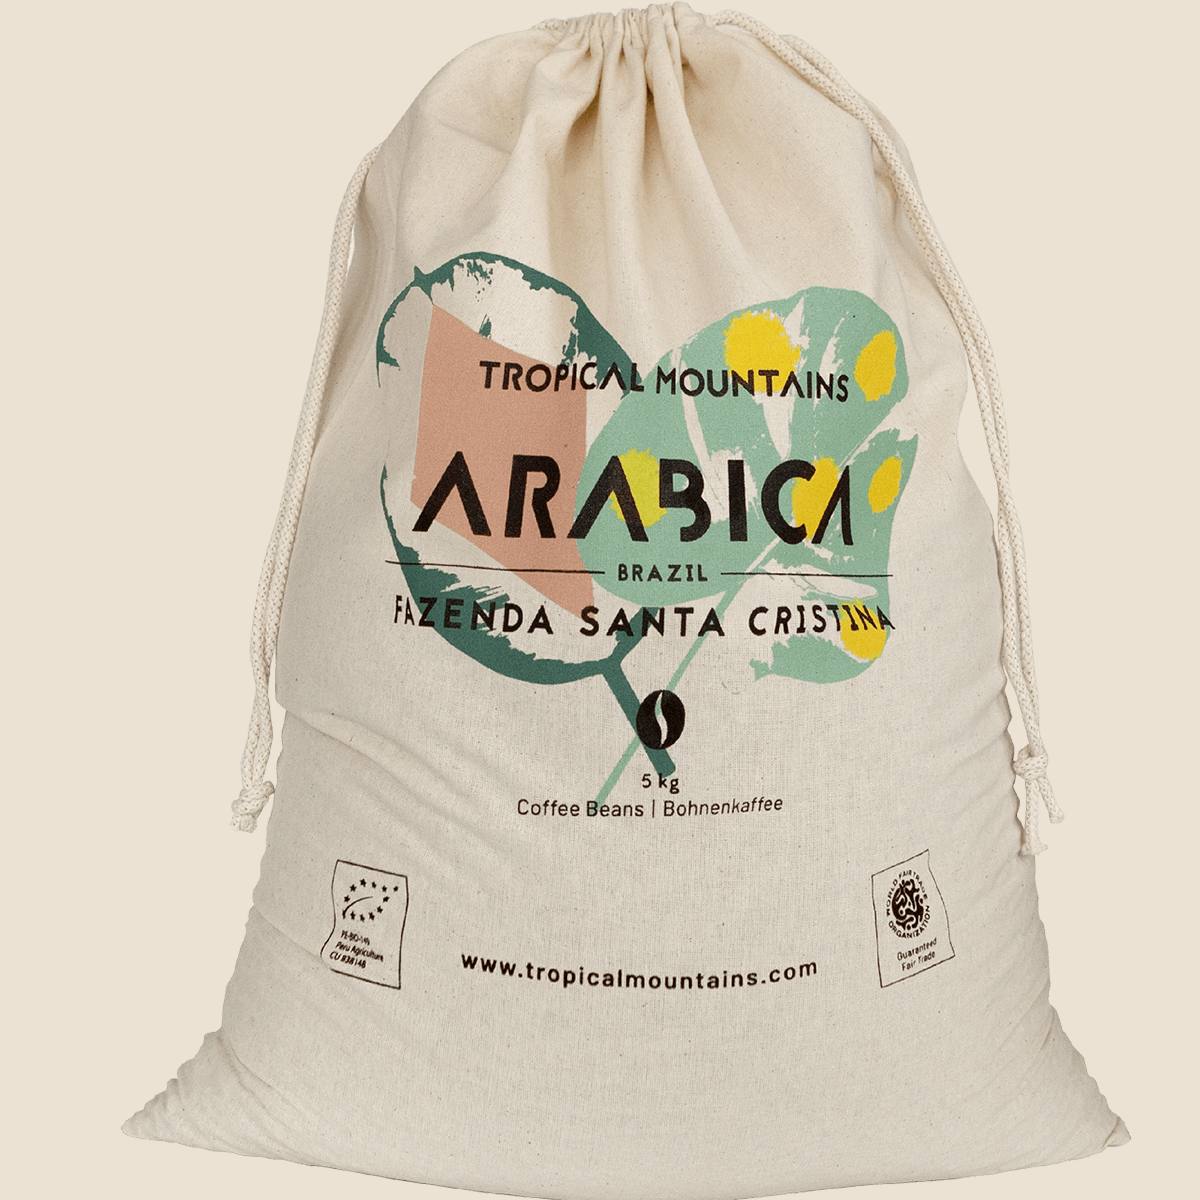 Brazil ARABICA «Cafe Feminino» Organic Fair Trade Green Coffee